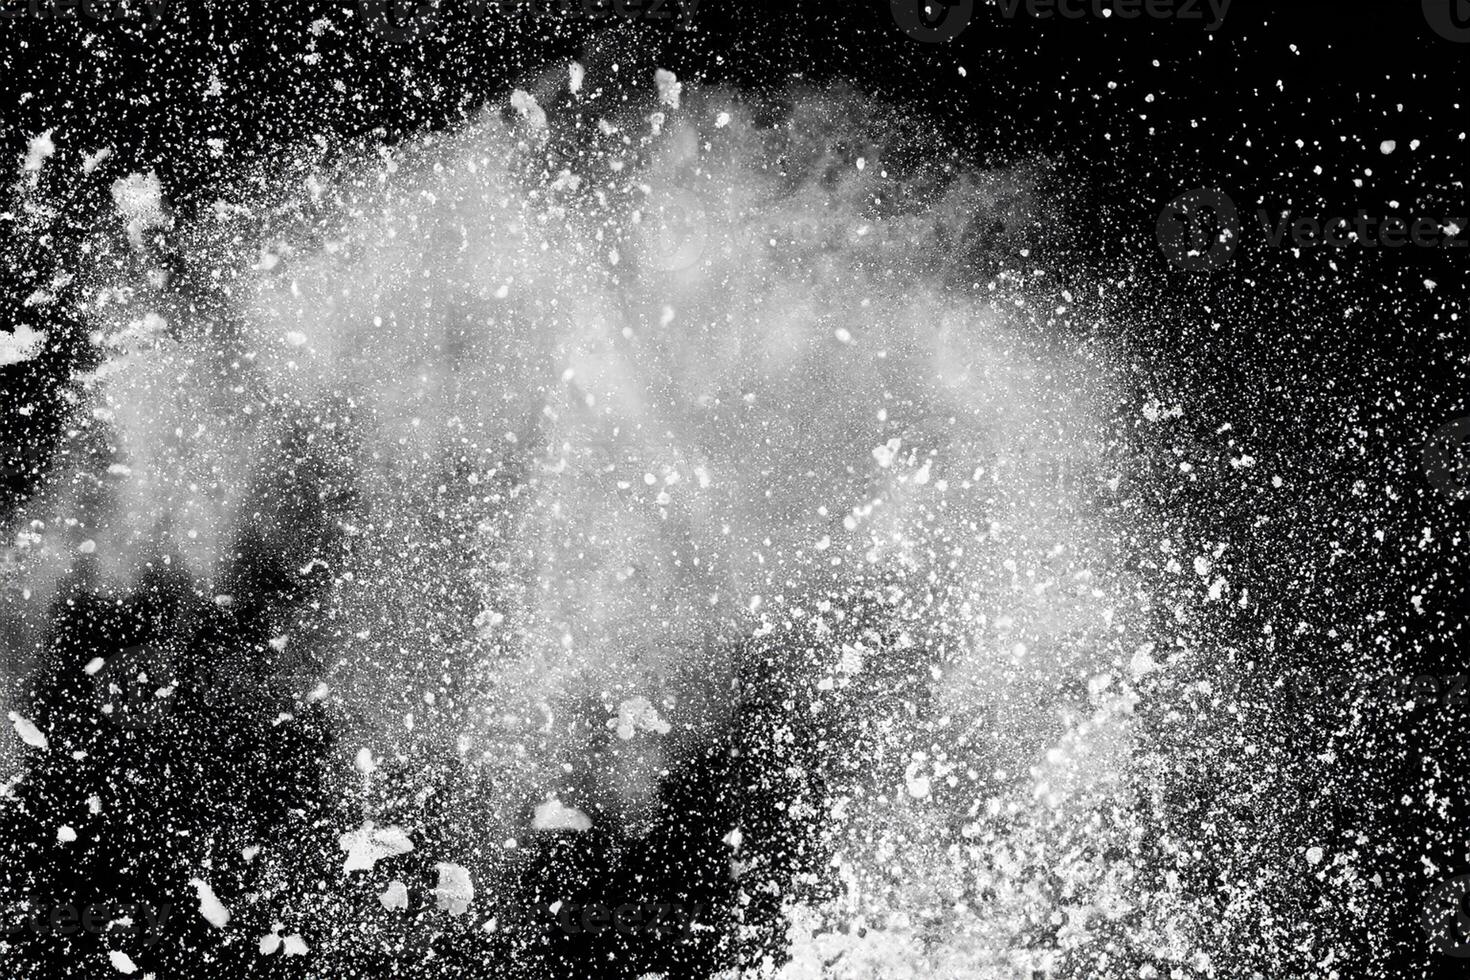 Bizarre forms of white powder explosion cloud against black background.White dust particles splash. photo